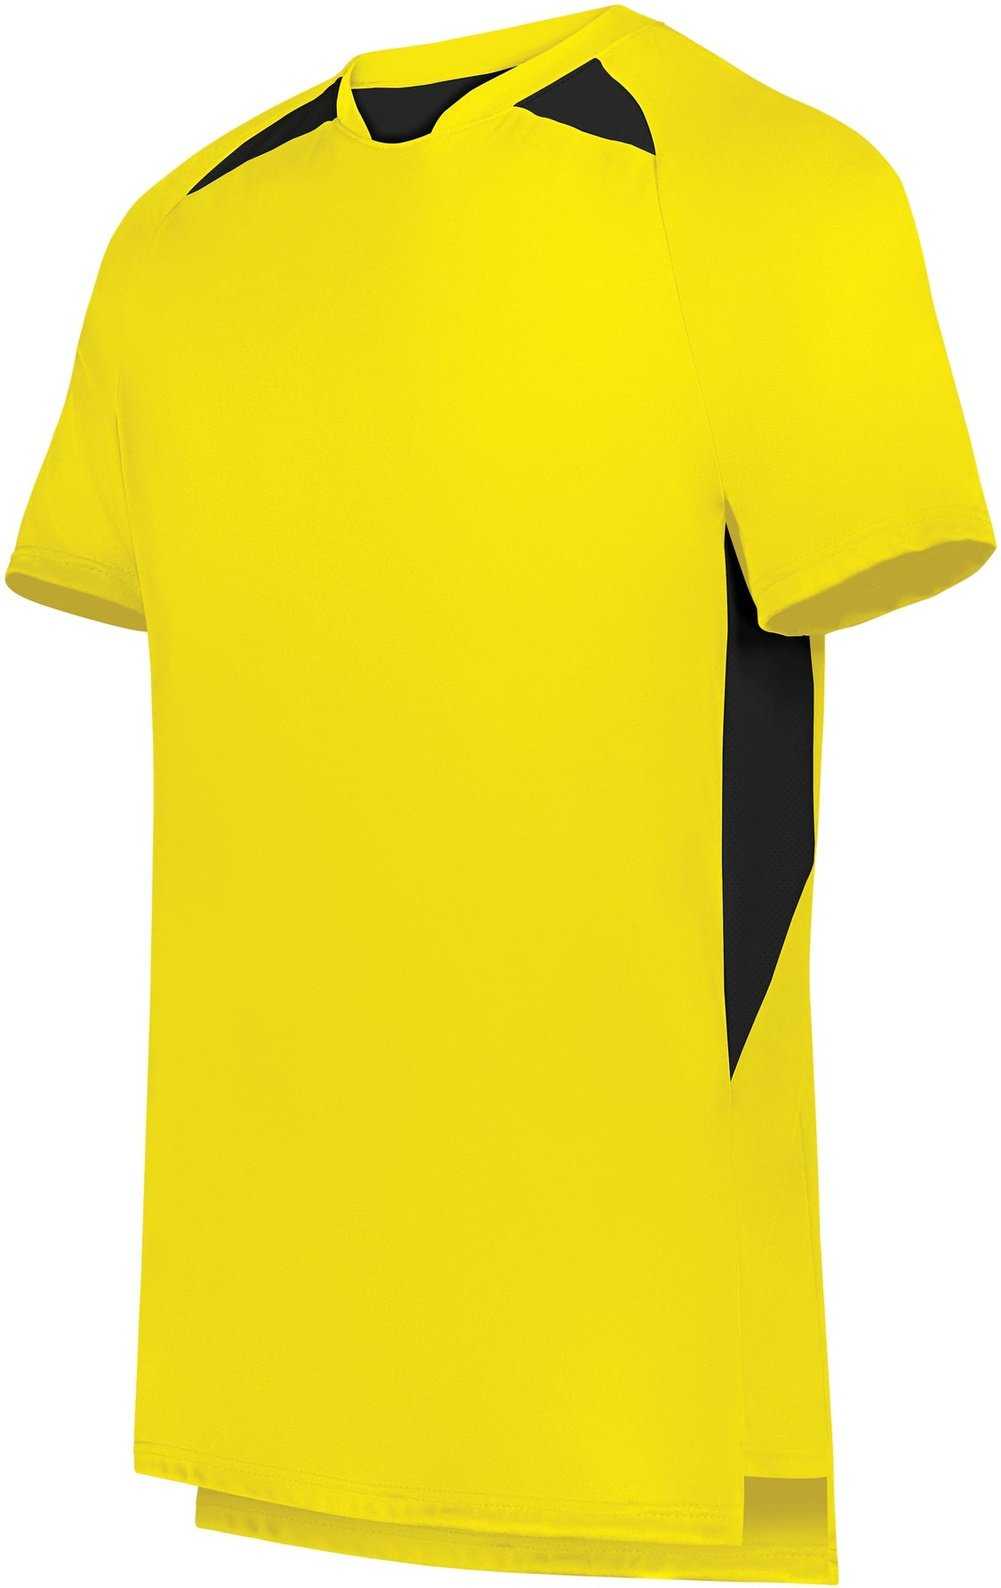 High Five 322990 Hawk Evolution Soccer Jersey - Power Yellow Black - HIT a Double